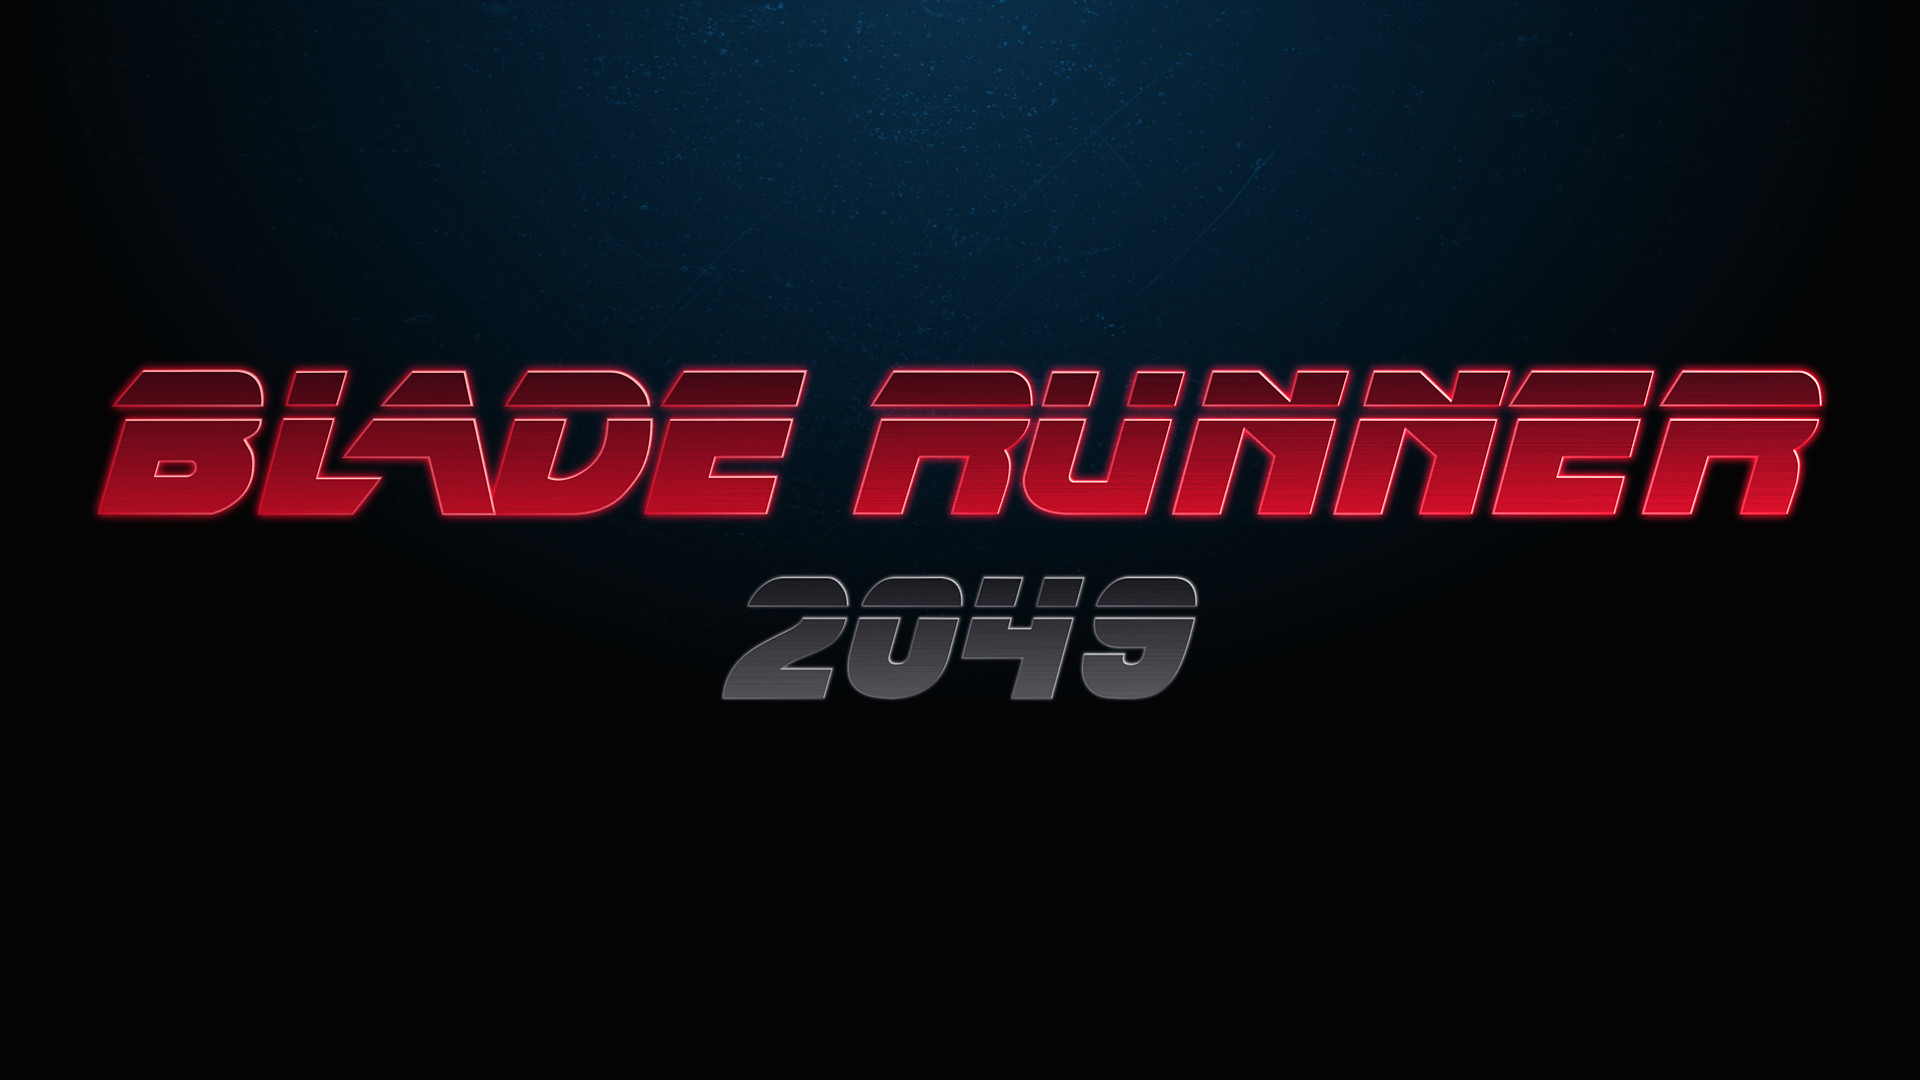 … Blade Runner 2049 wallpaper HD by kartine29